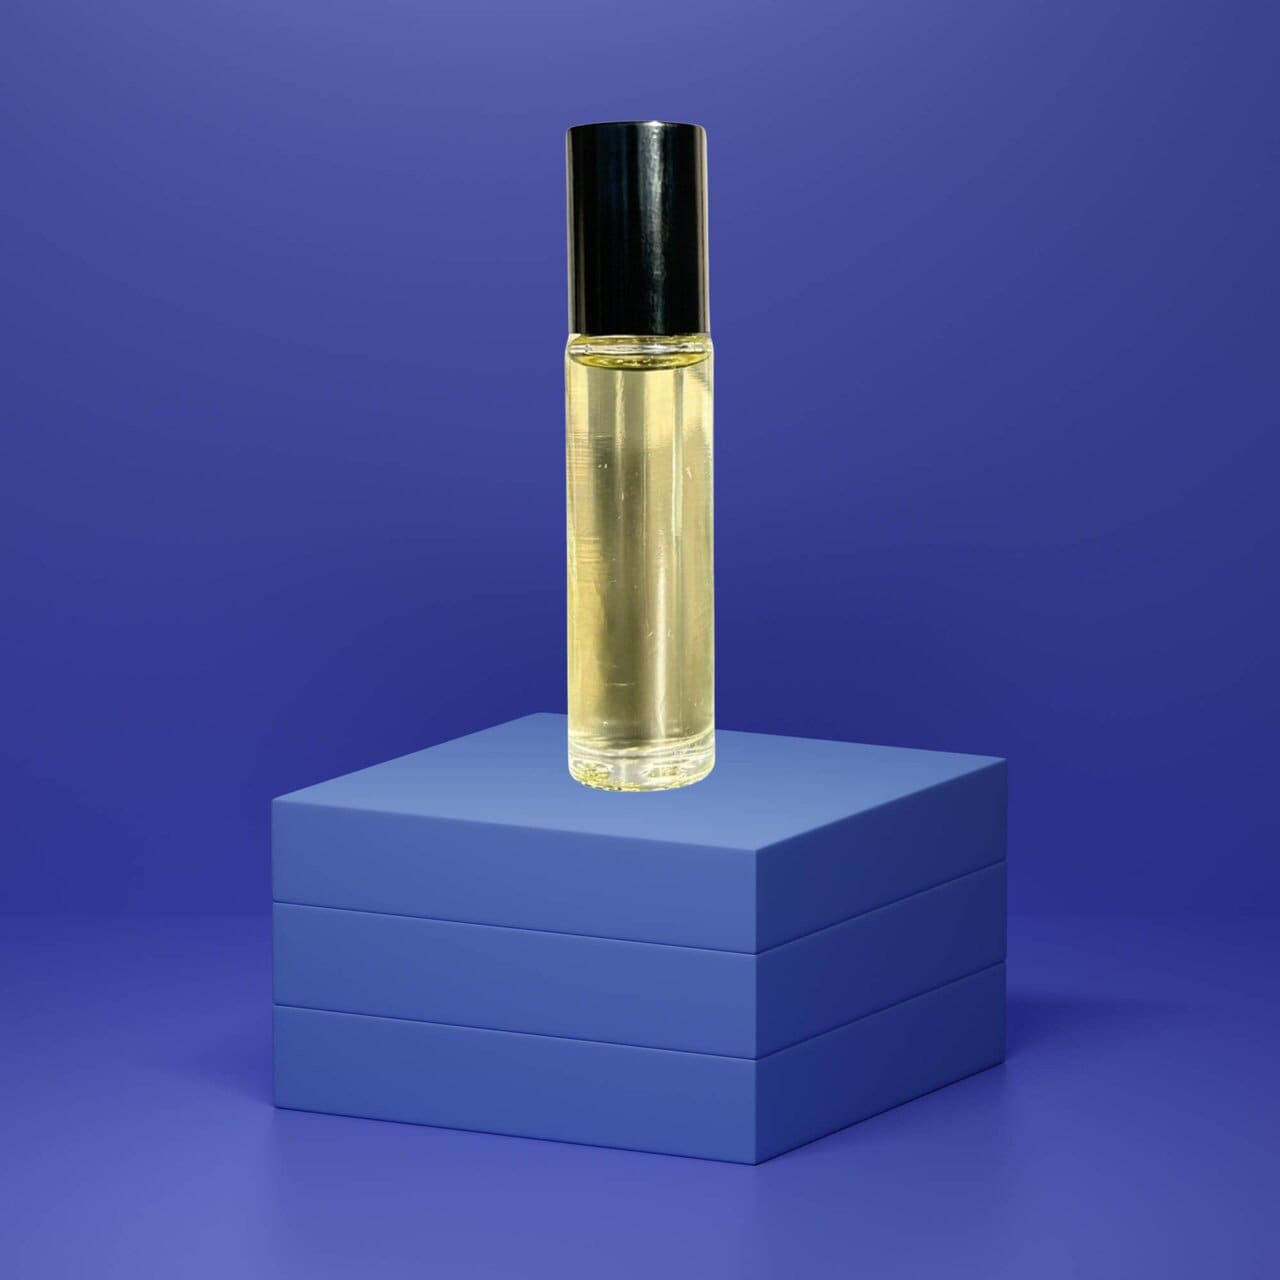 Amber Musk - Perfume Oil – Dancing Cranes Imports